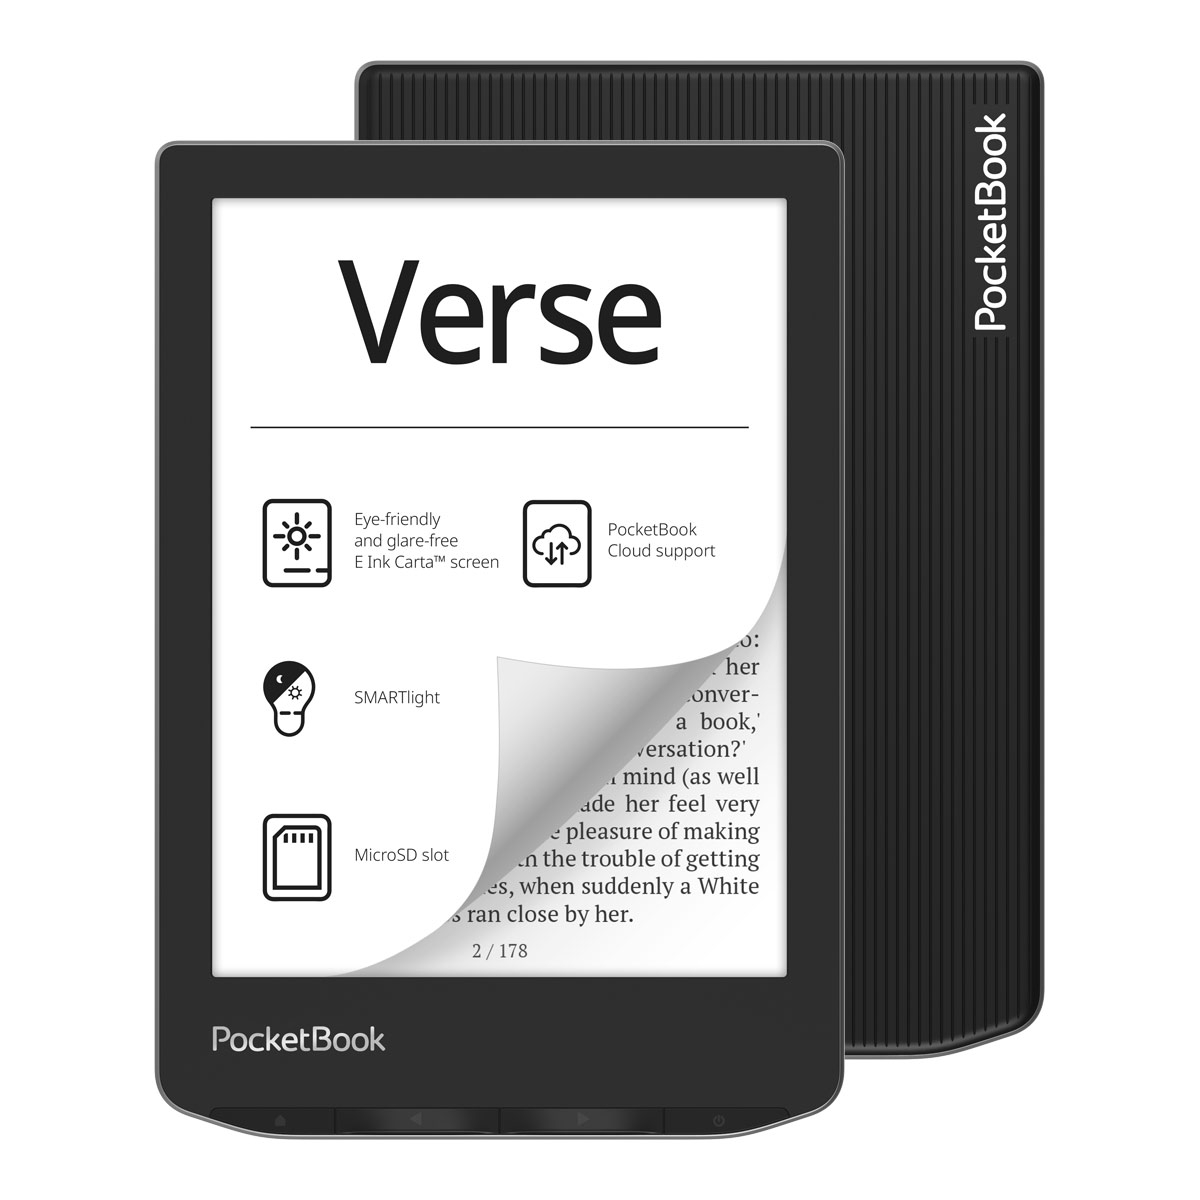 Czytnik ebooków PocketBook Verse to kolejny 6'' bestseller